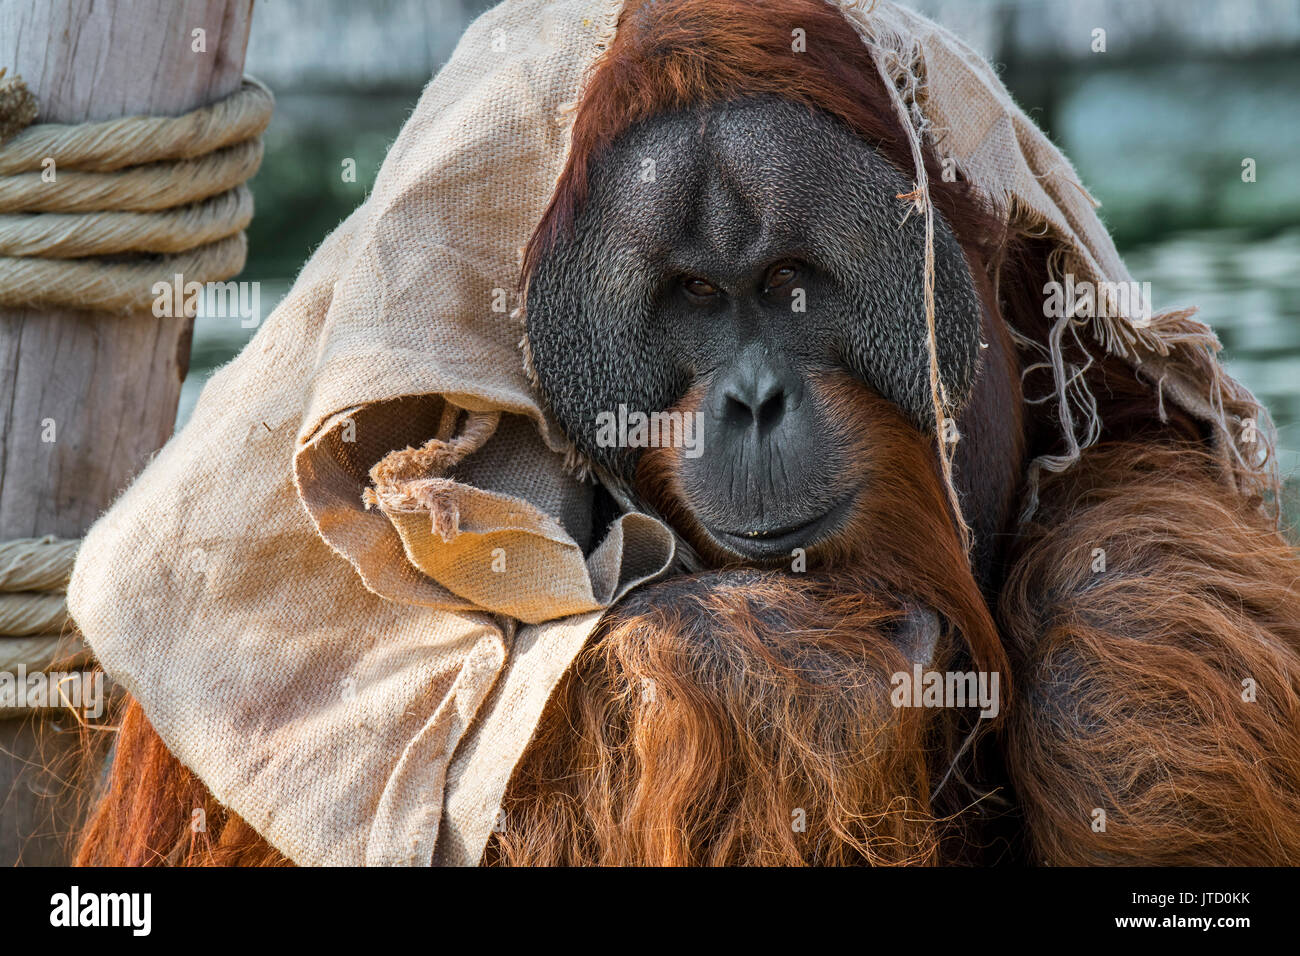 Sumatra Orang-Utan/Orang utang (Pongo abelii) männlich in Tuch in Zoo zeigt große Wange Klappen, beheimatet in Sumatra gewickelt Stockfoto